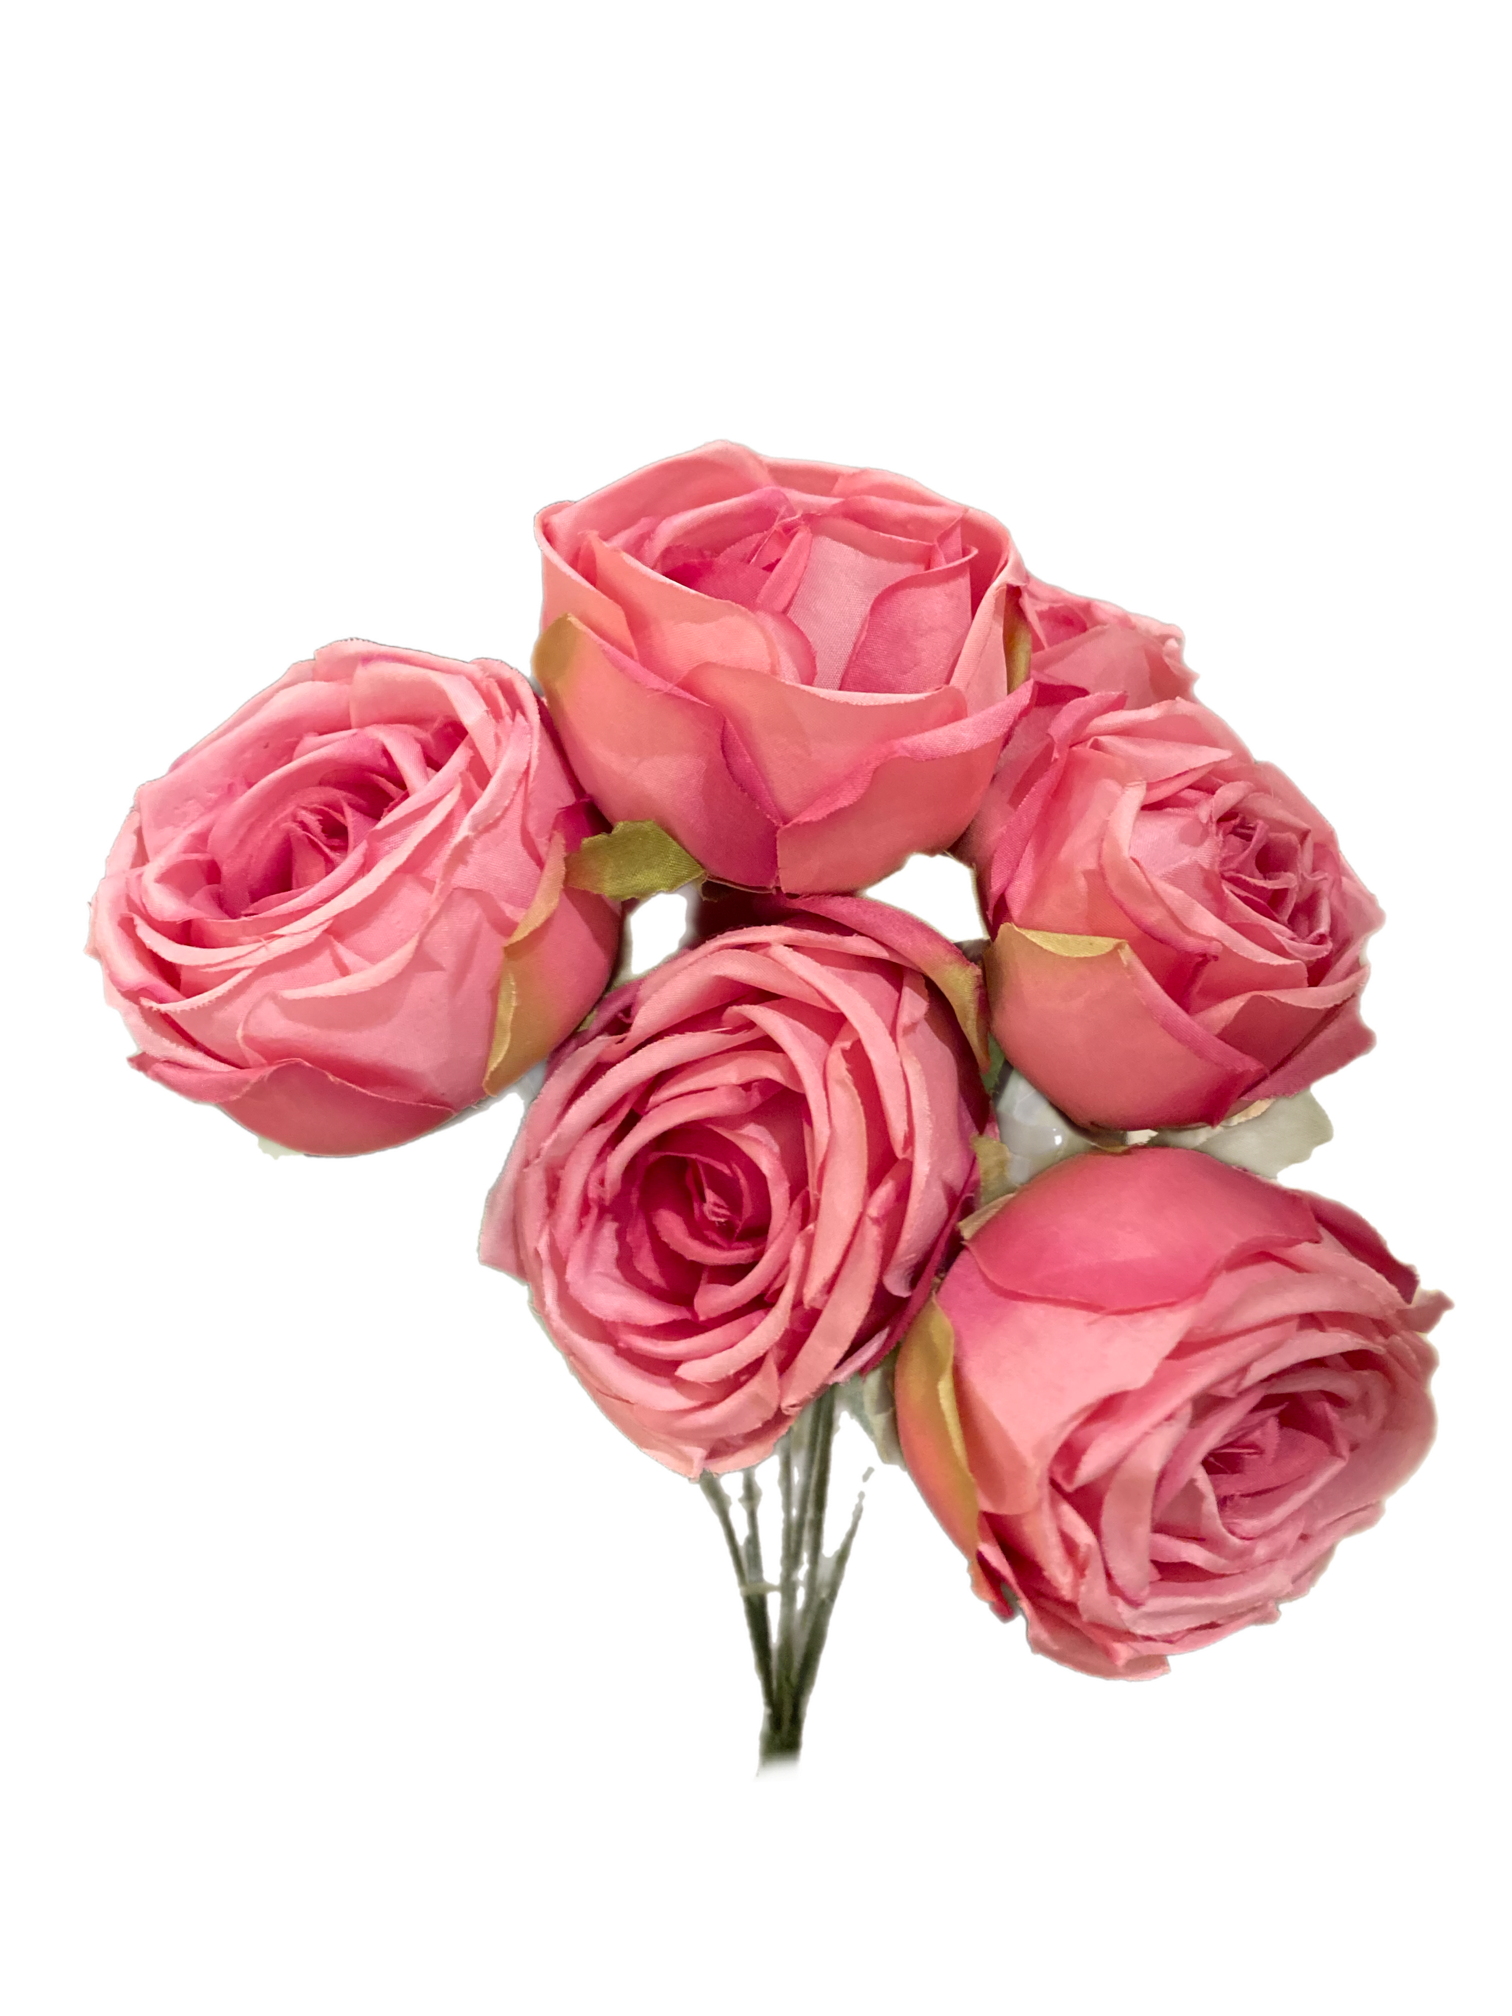 16" Fuchsia Rose Bouquet